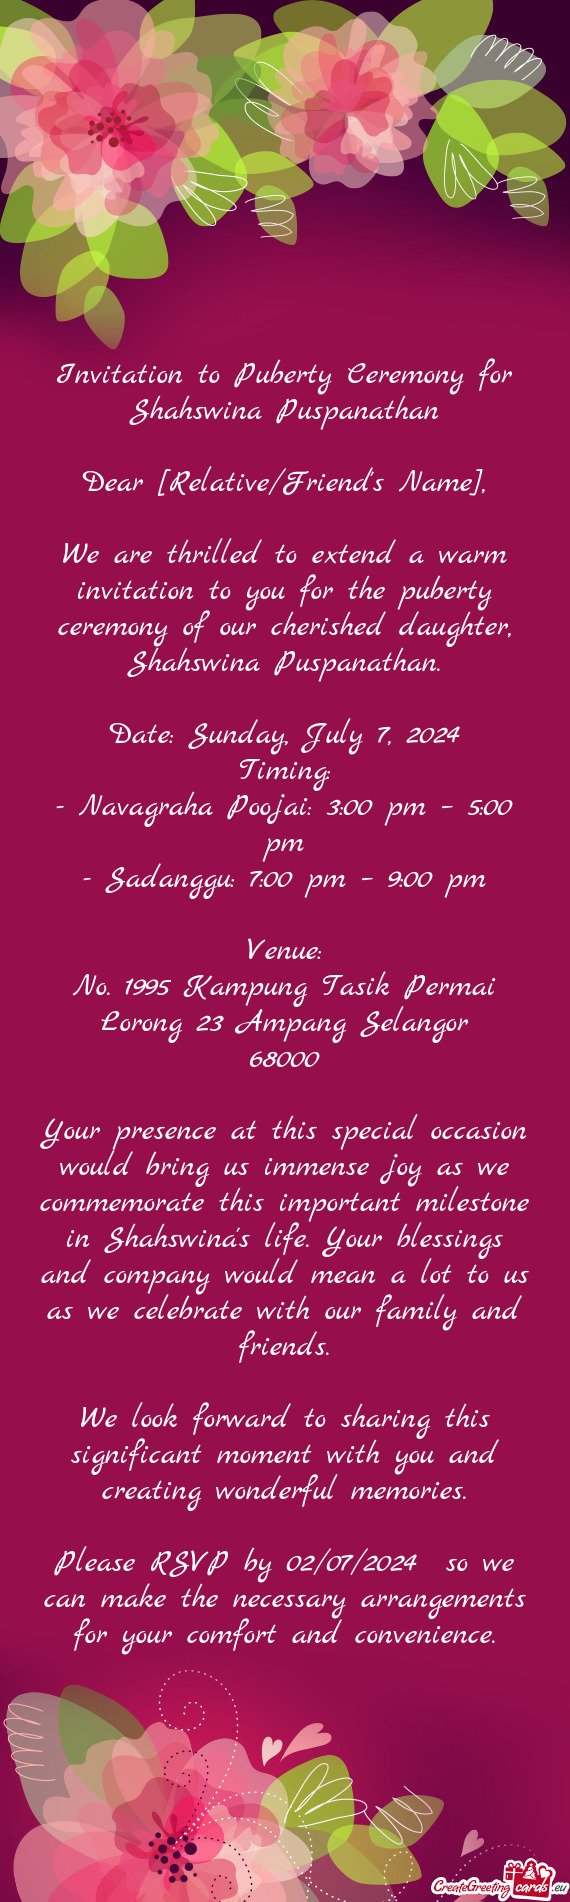 Invitation to Puberty Ceremony for Shahswina Puspanathan